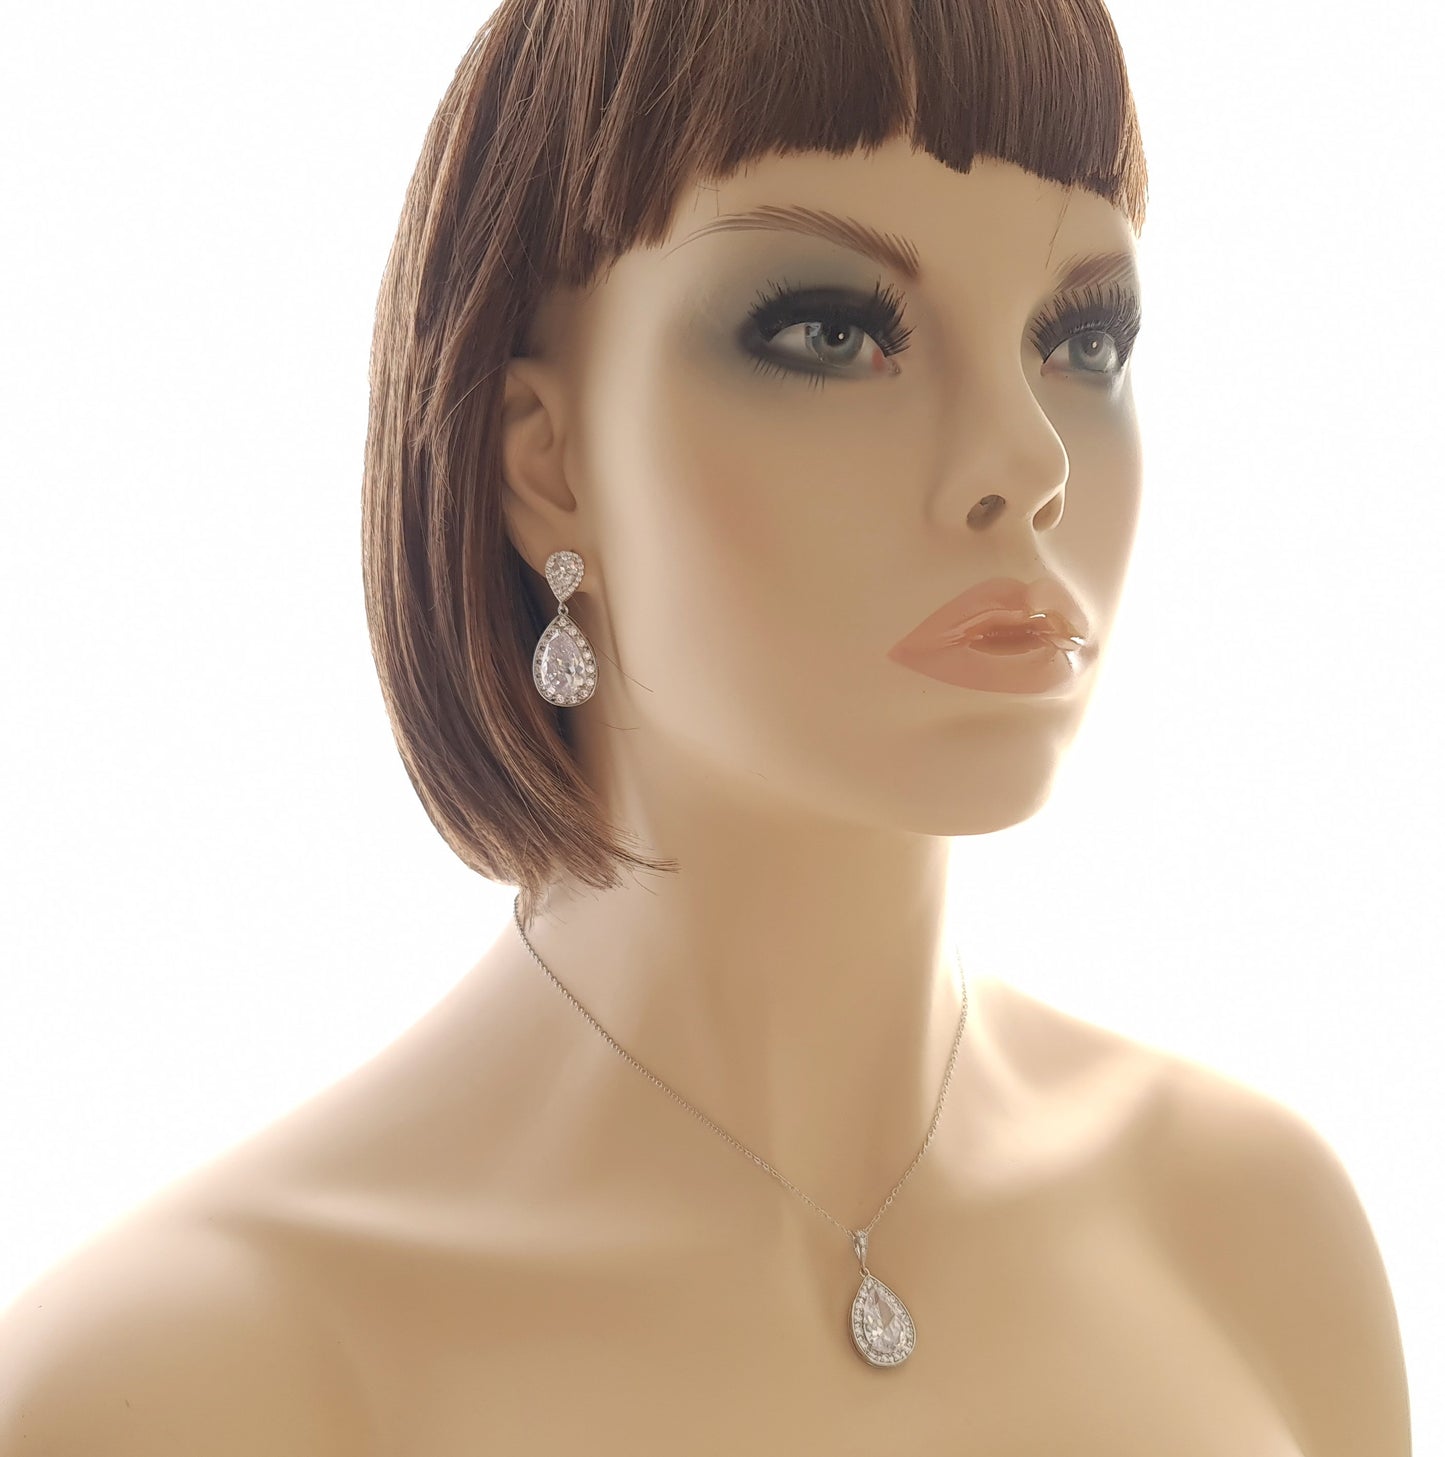 Teardrop Bridal Jewelry Set in Rose Gold- Evelyn